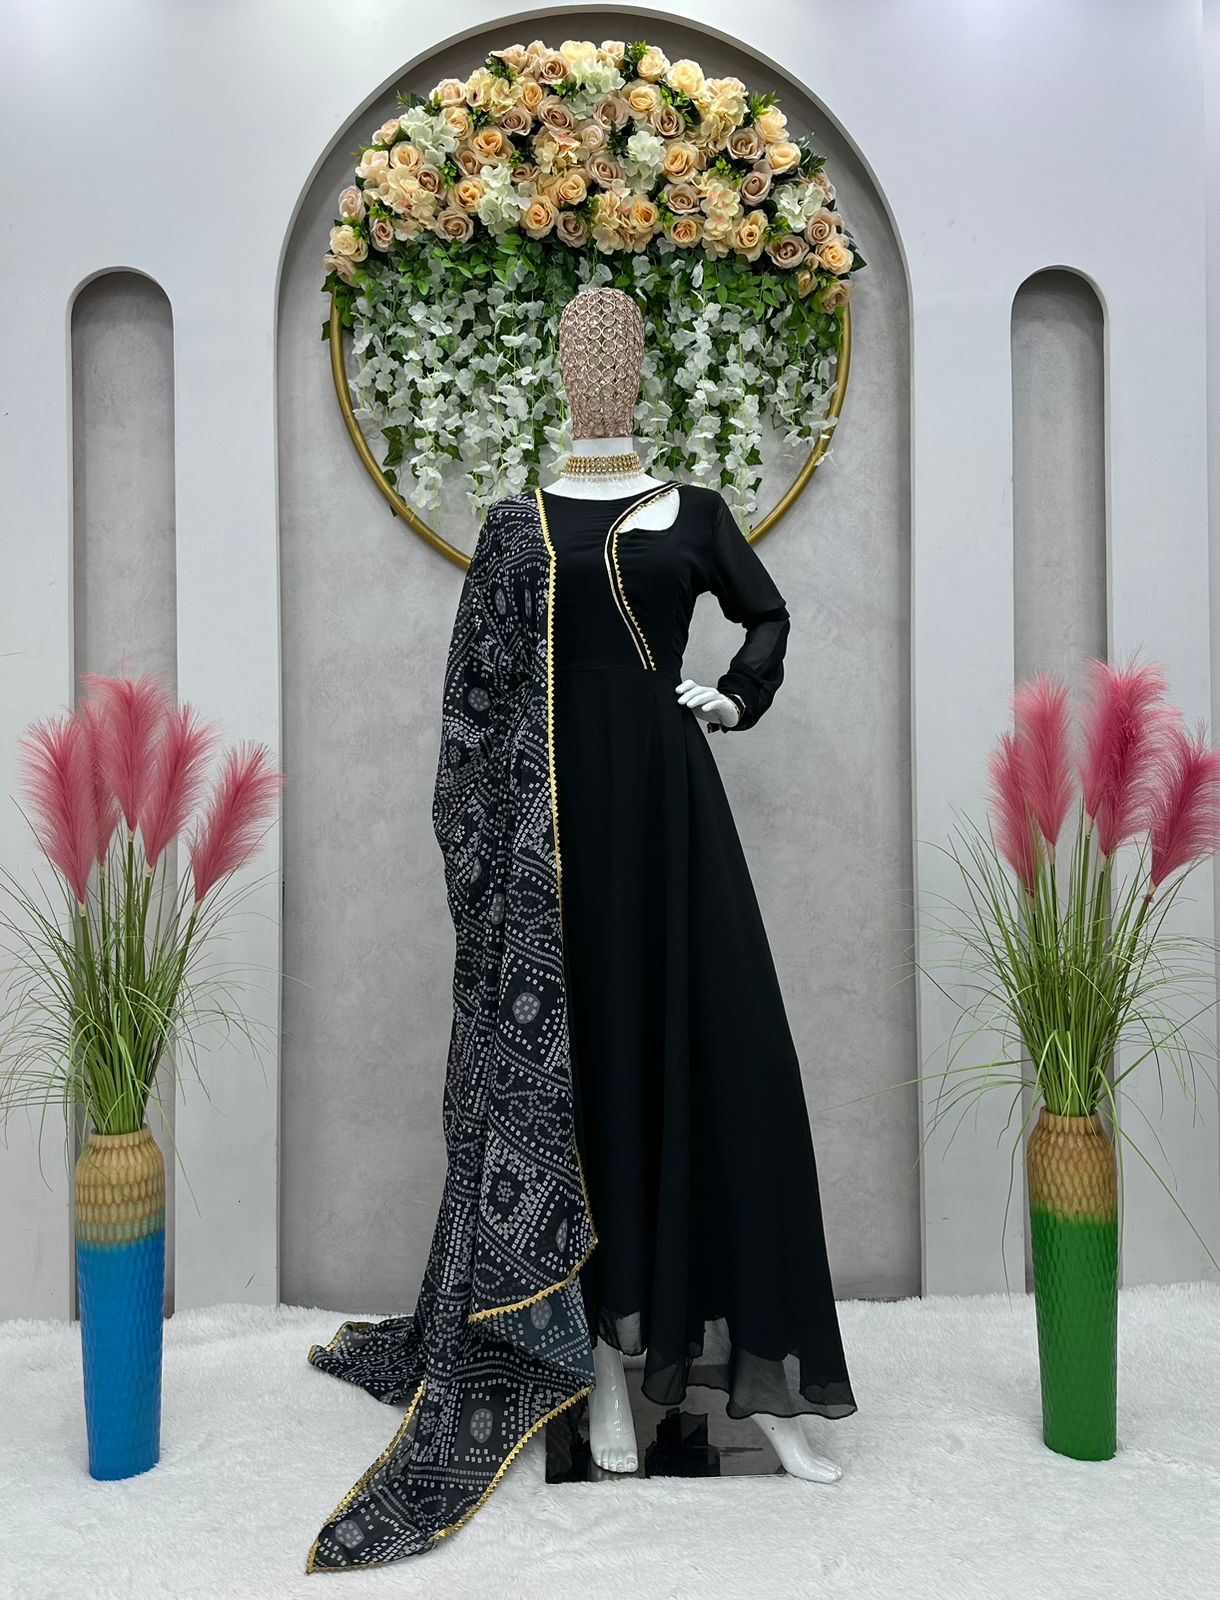 OOAK plain black dress gown outfit for BJD Doll 1/4 Popovy size | eBay